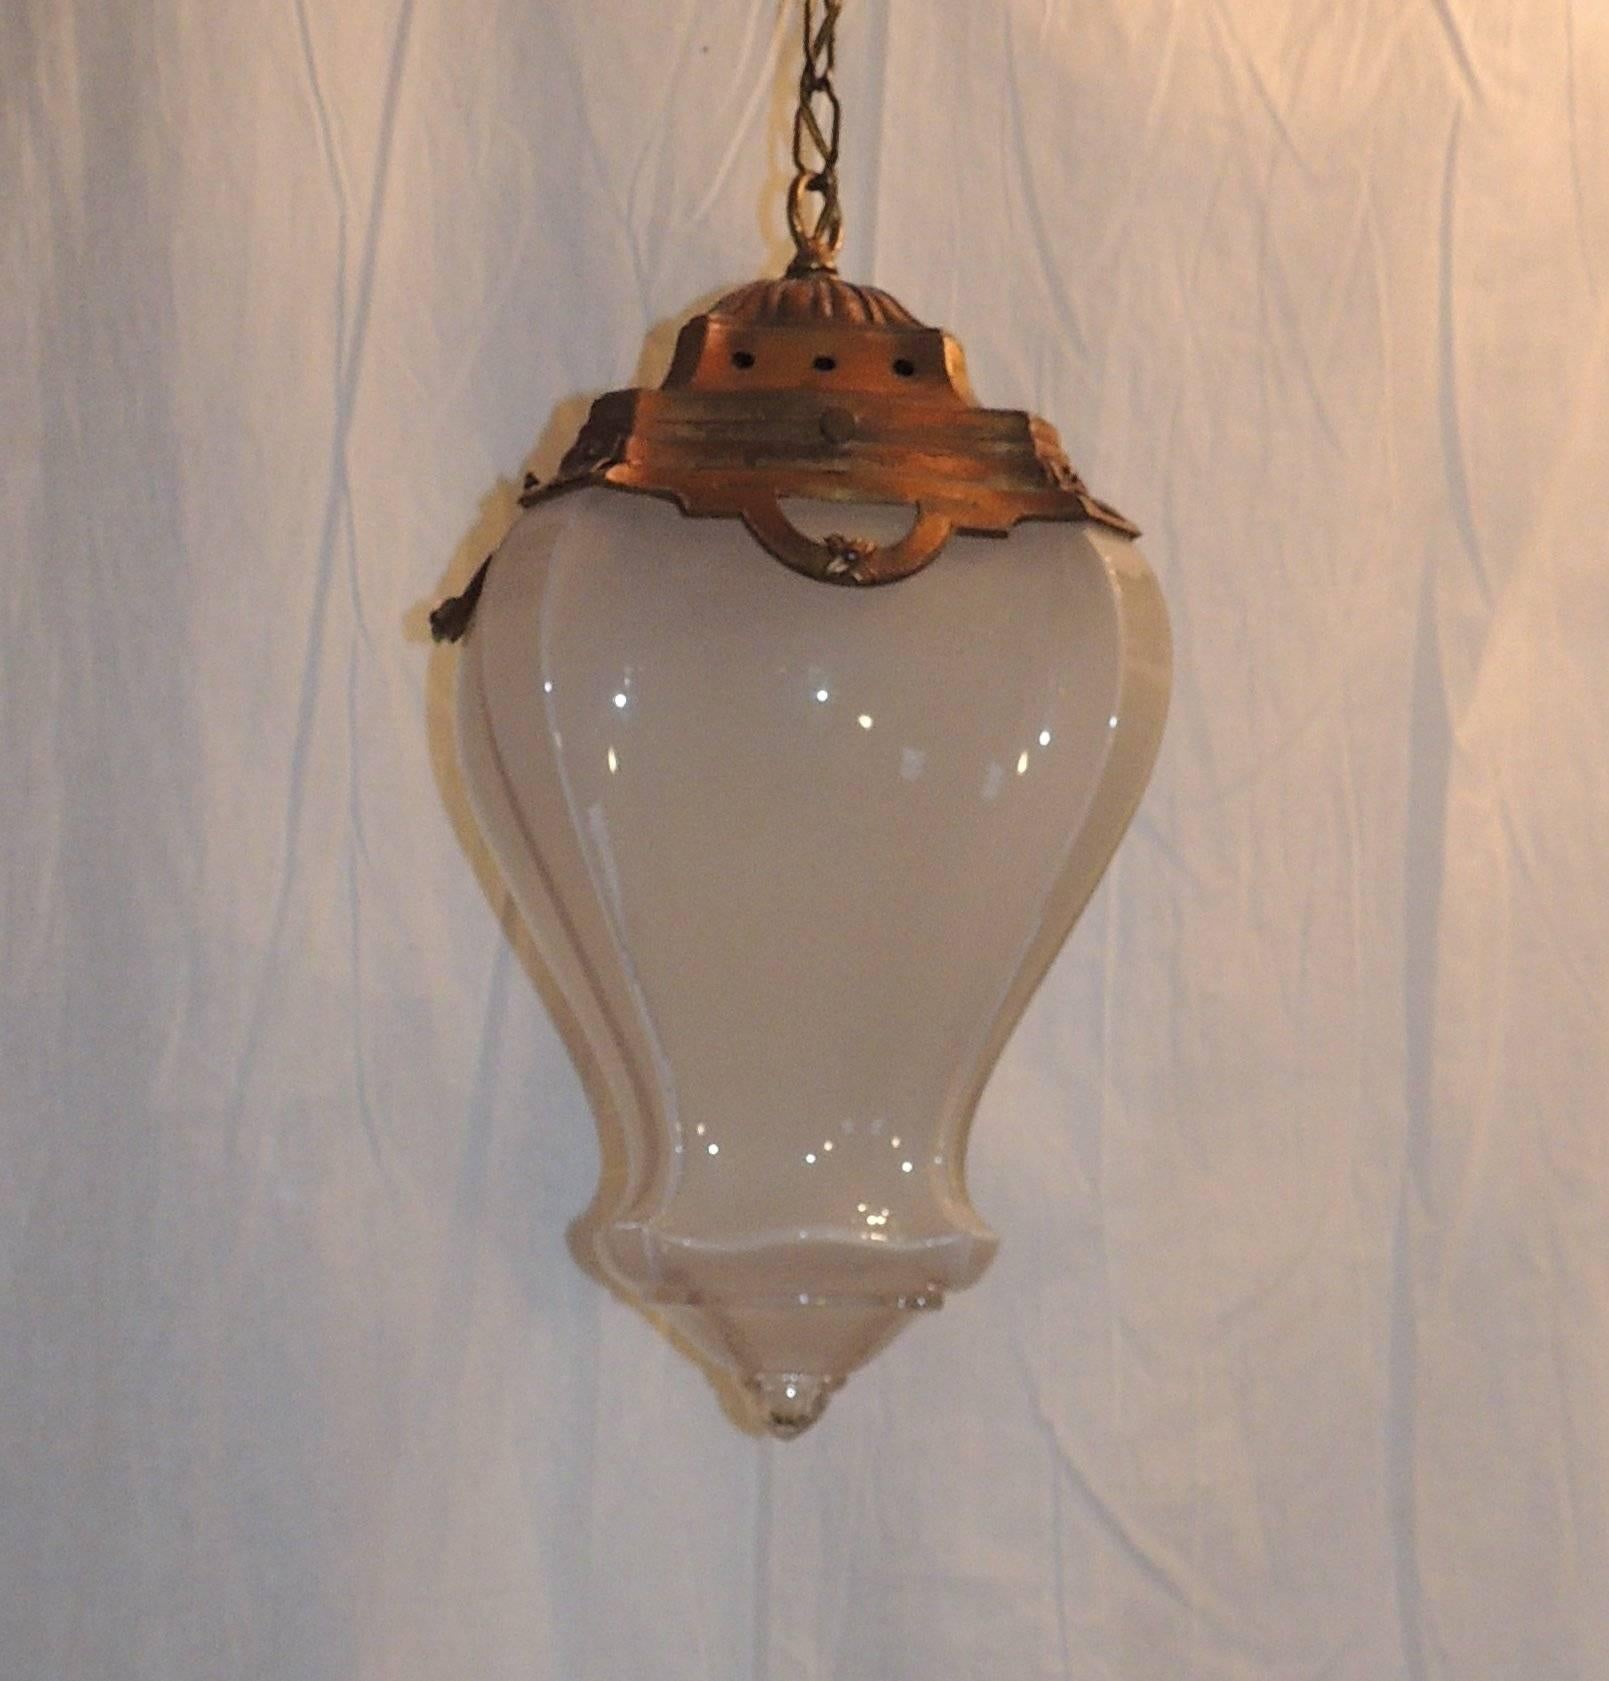 A wonderful gilt bronze crown highlights the beautiful curves of the original milk glass lantern.

Measures: 18